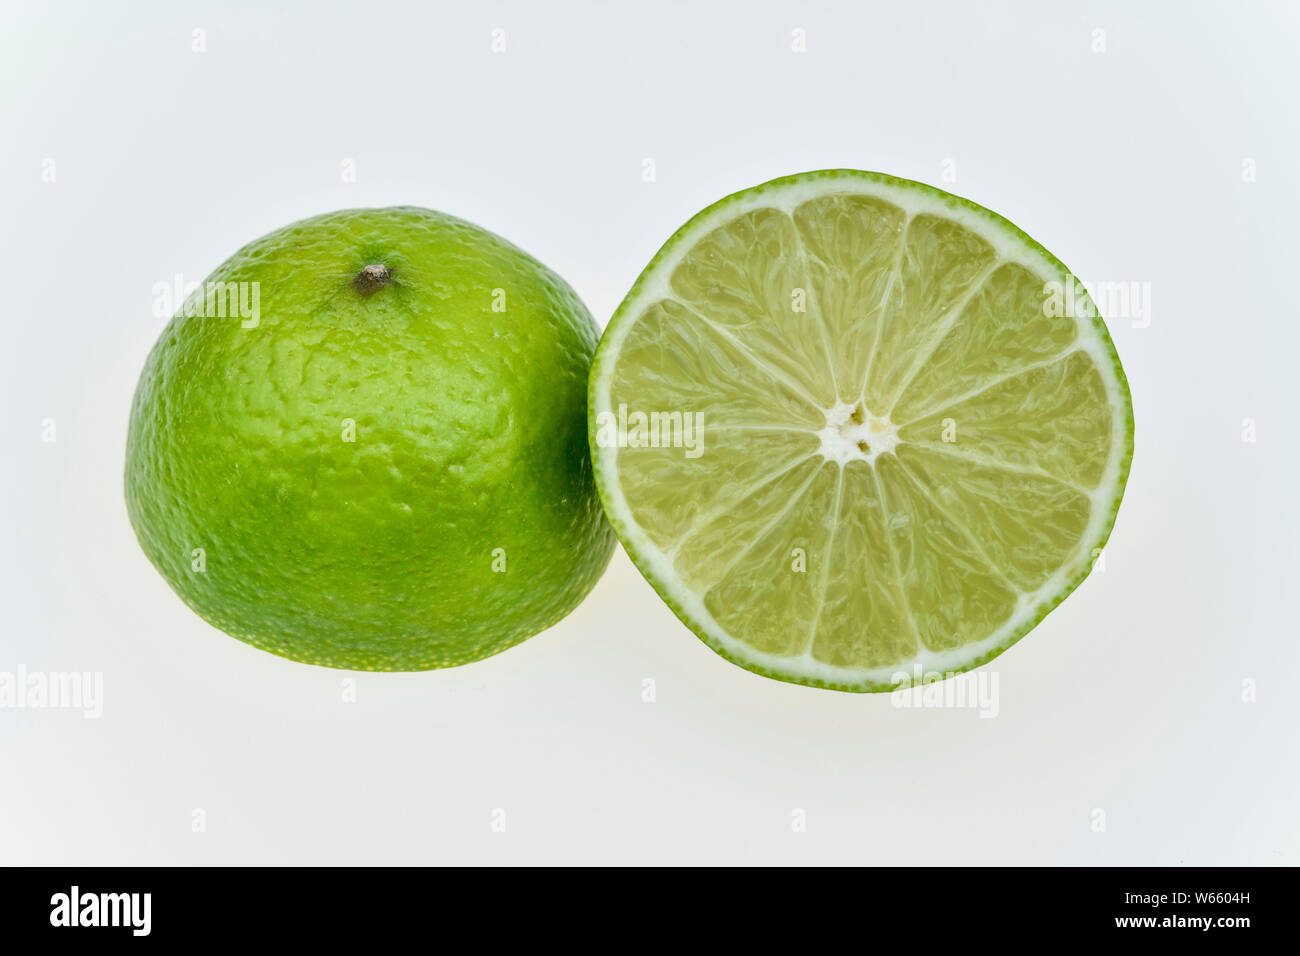 key lime, Citrus aurantifolia Stock Photo